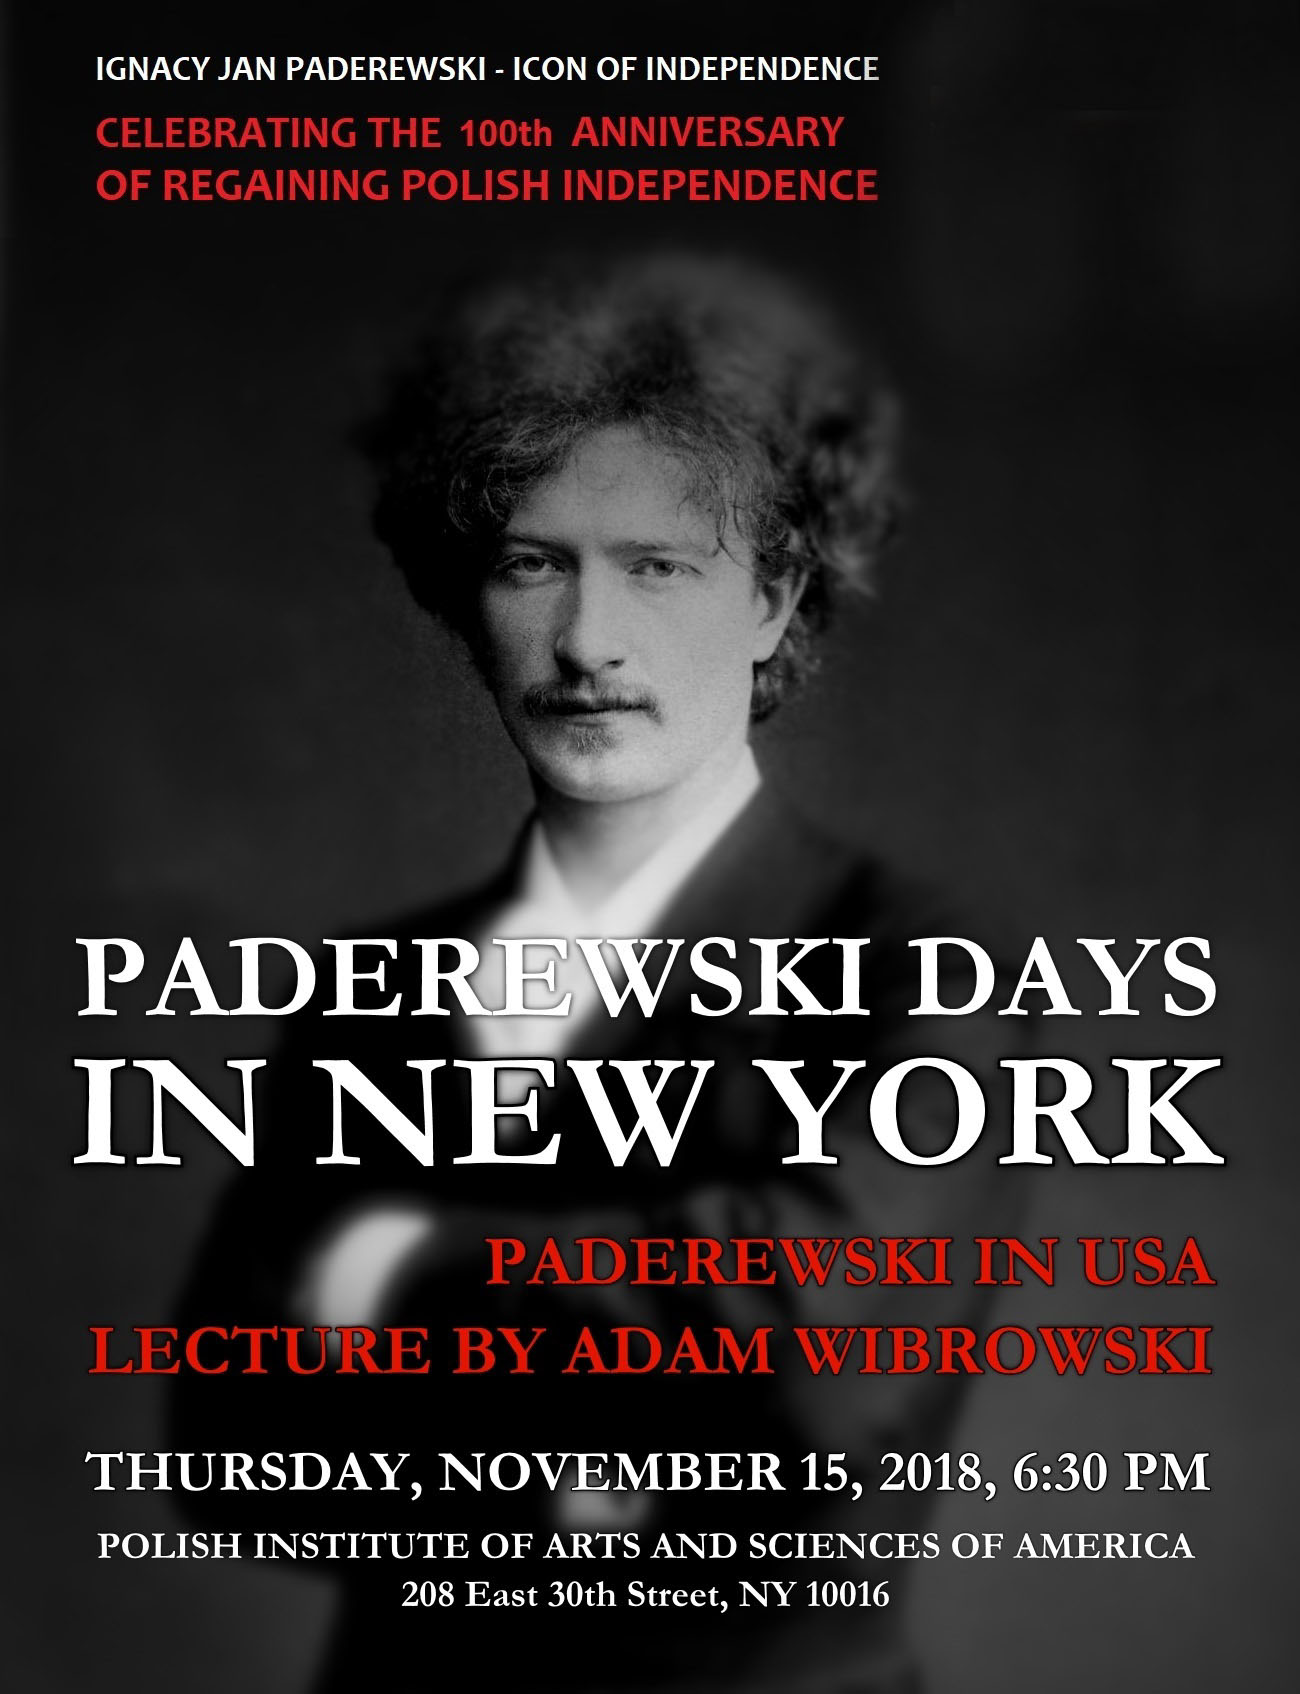 Paderewski Days in New York